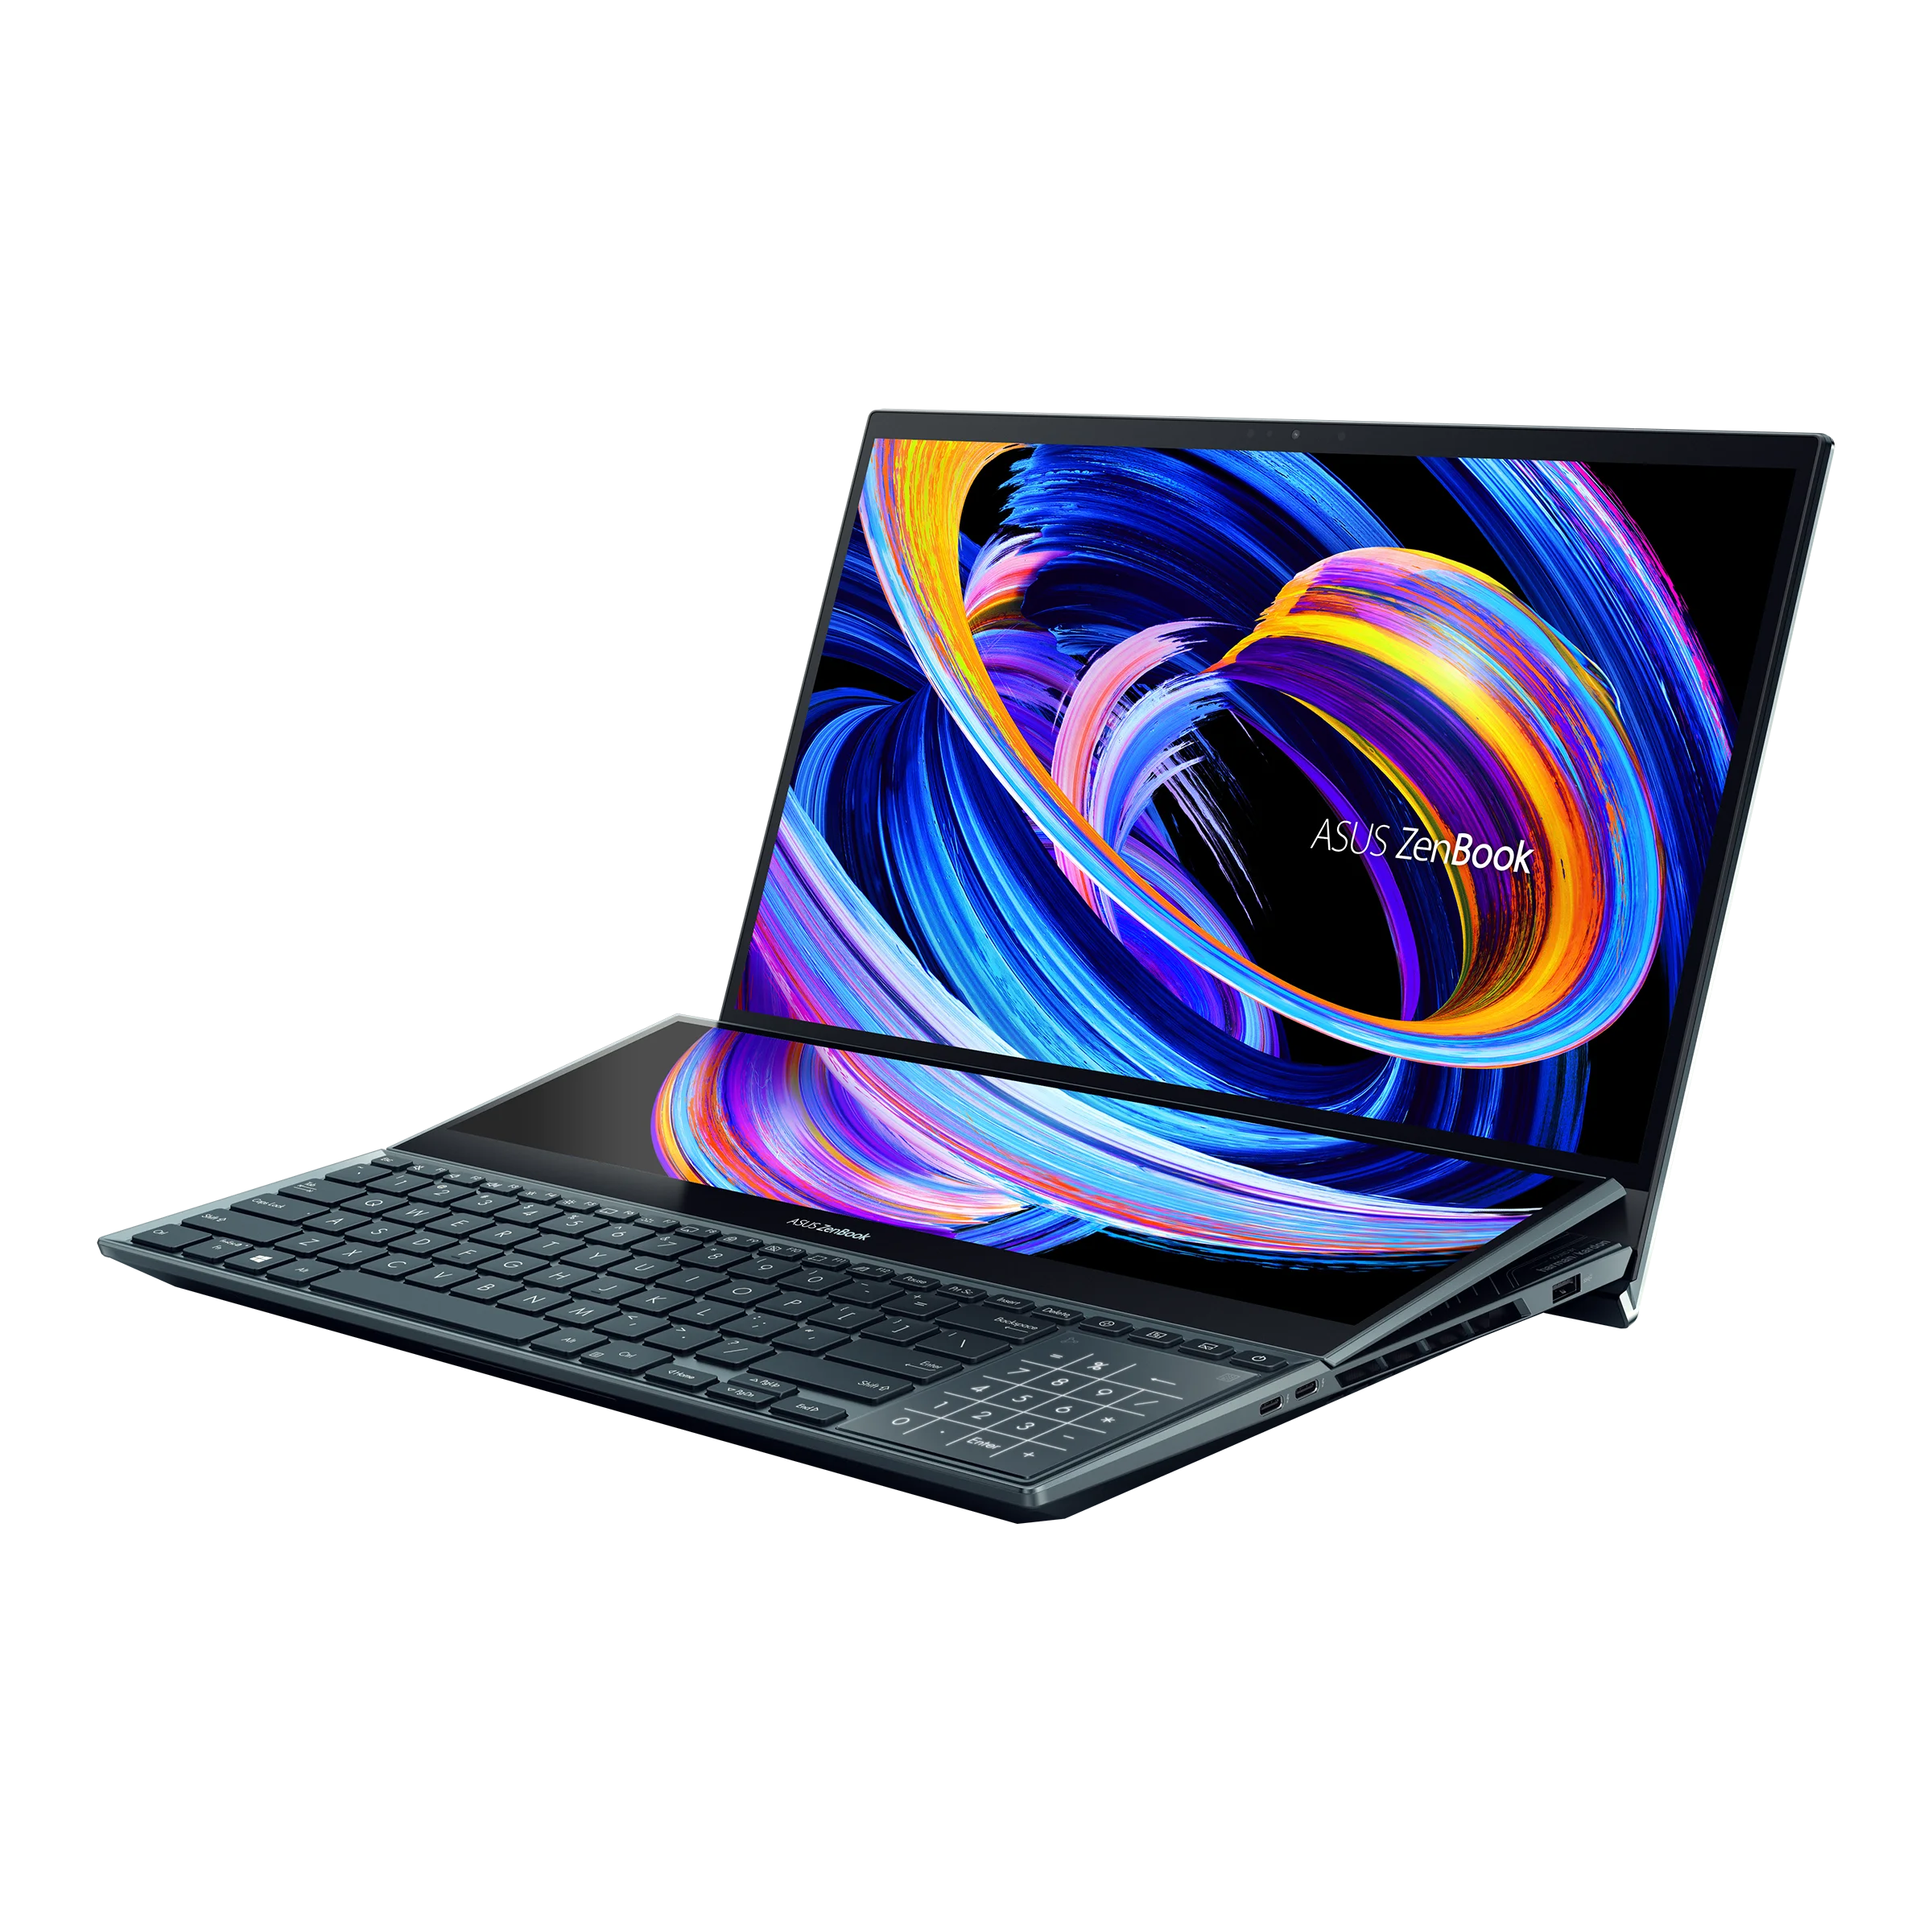 

NEW 2020 ROG Zephyrus S Ultra Slim Gaming Laptop, 15.6" 144Hz IPS-Type Full HD, GeForce RTX 2080, Intel Core i7-8750H CPU, 1